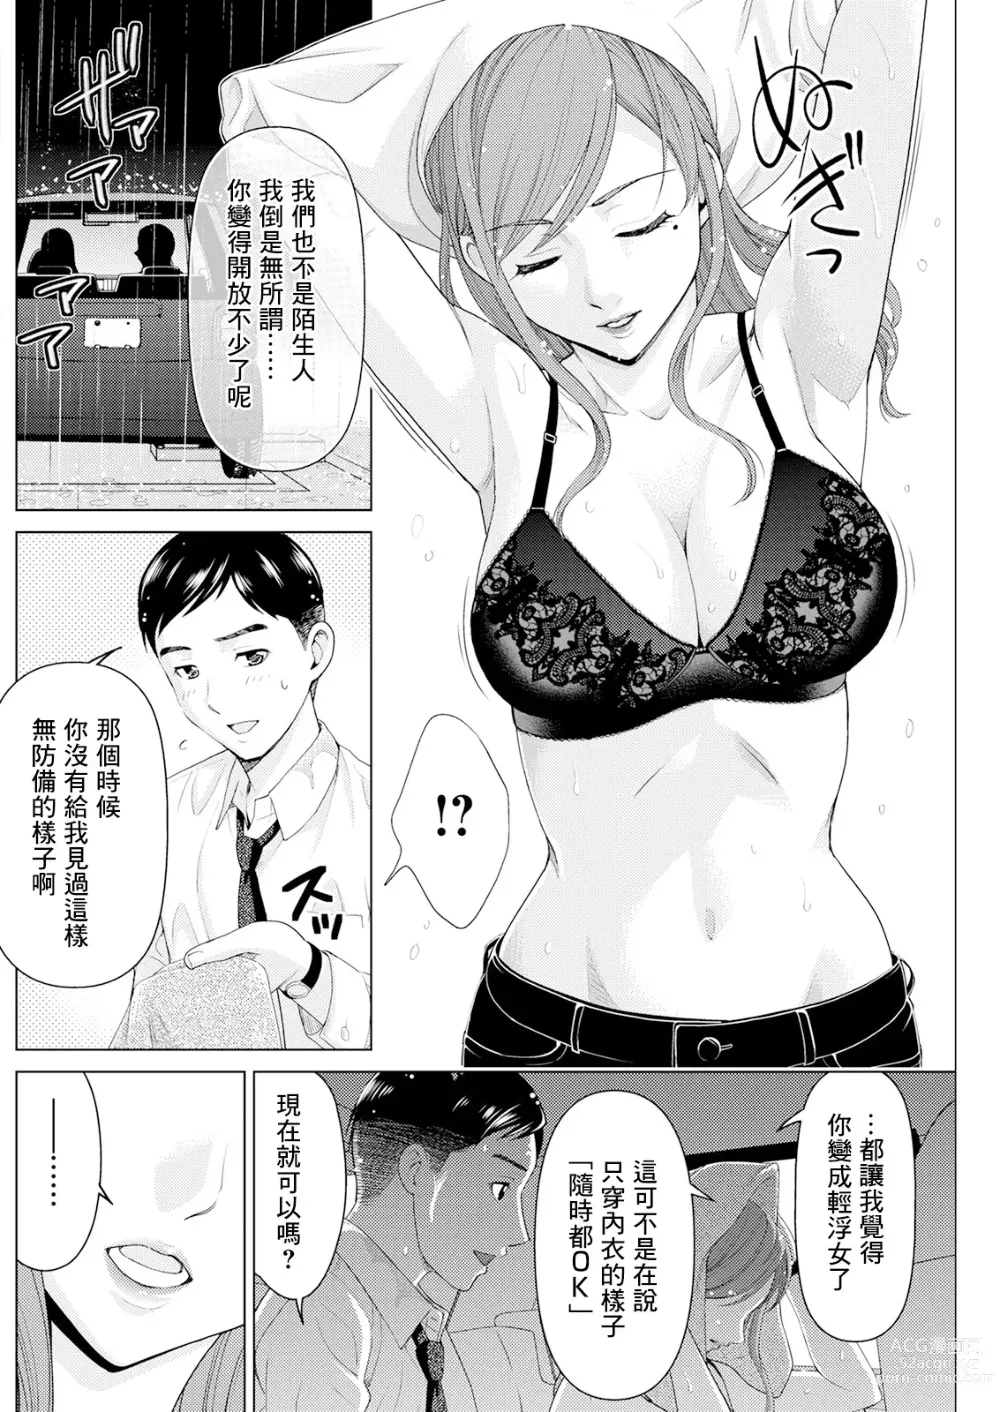 Page 6 of manga Kawari, Hateru.